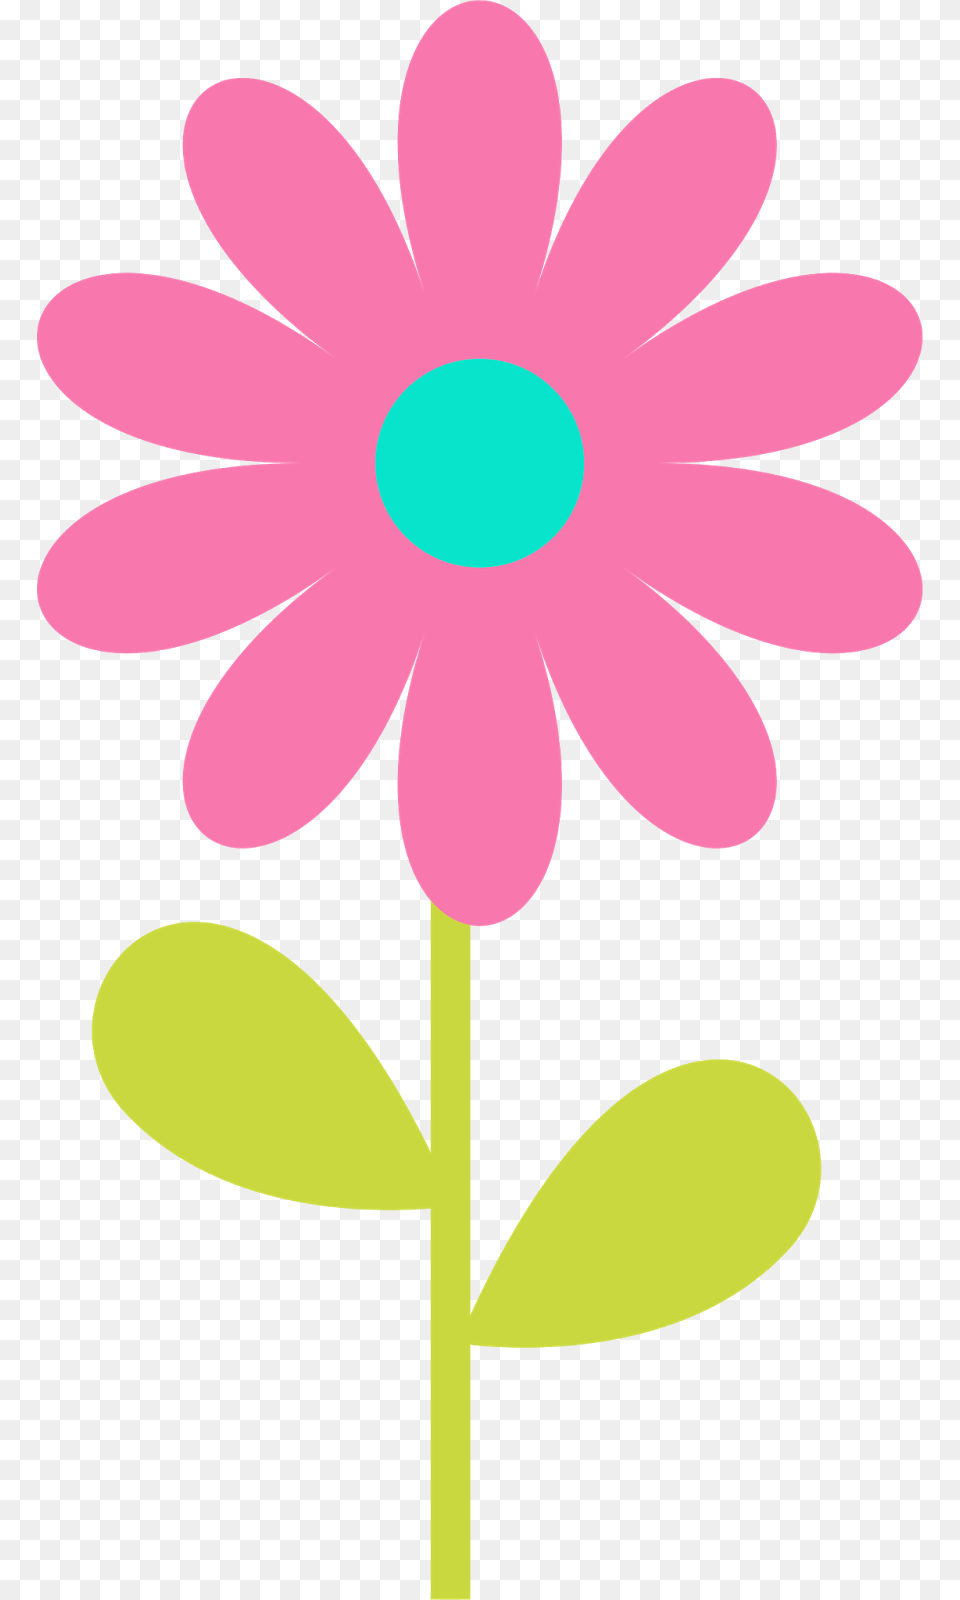 Clipart De Unicornios Para Scrapbook Cute Cartoon Flower With Faces, Plant, Petal, Daisy, Anemone Free Png